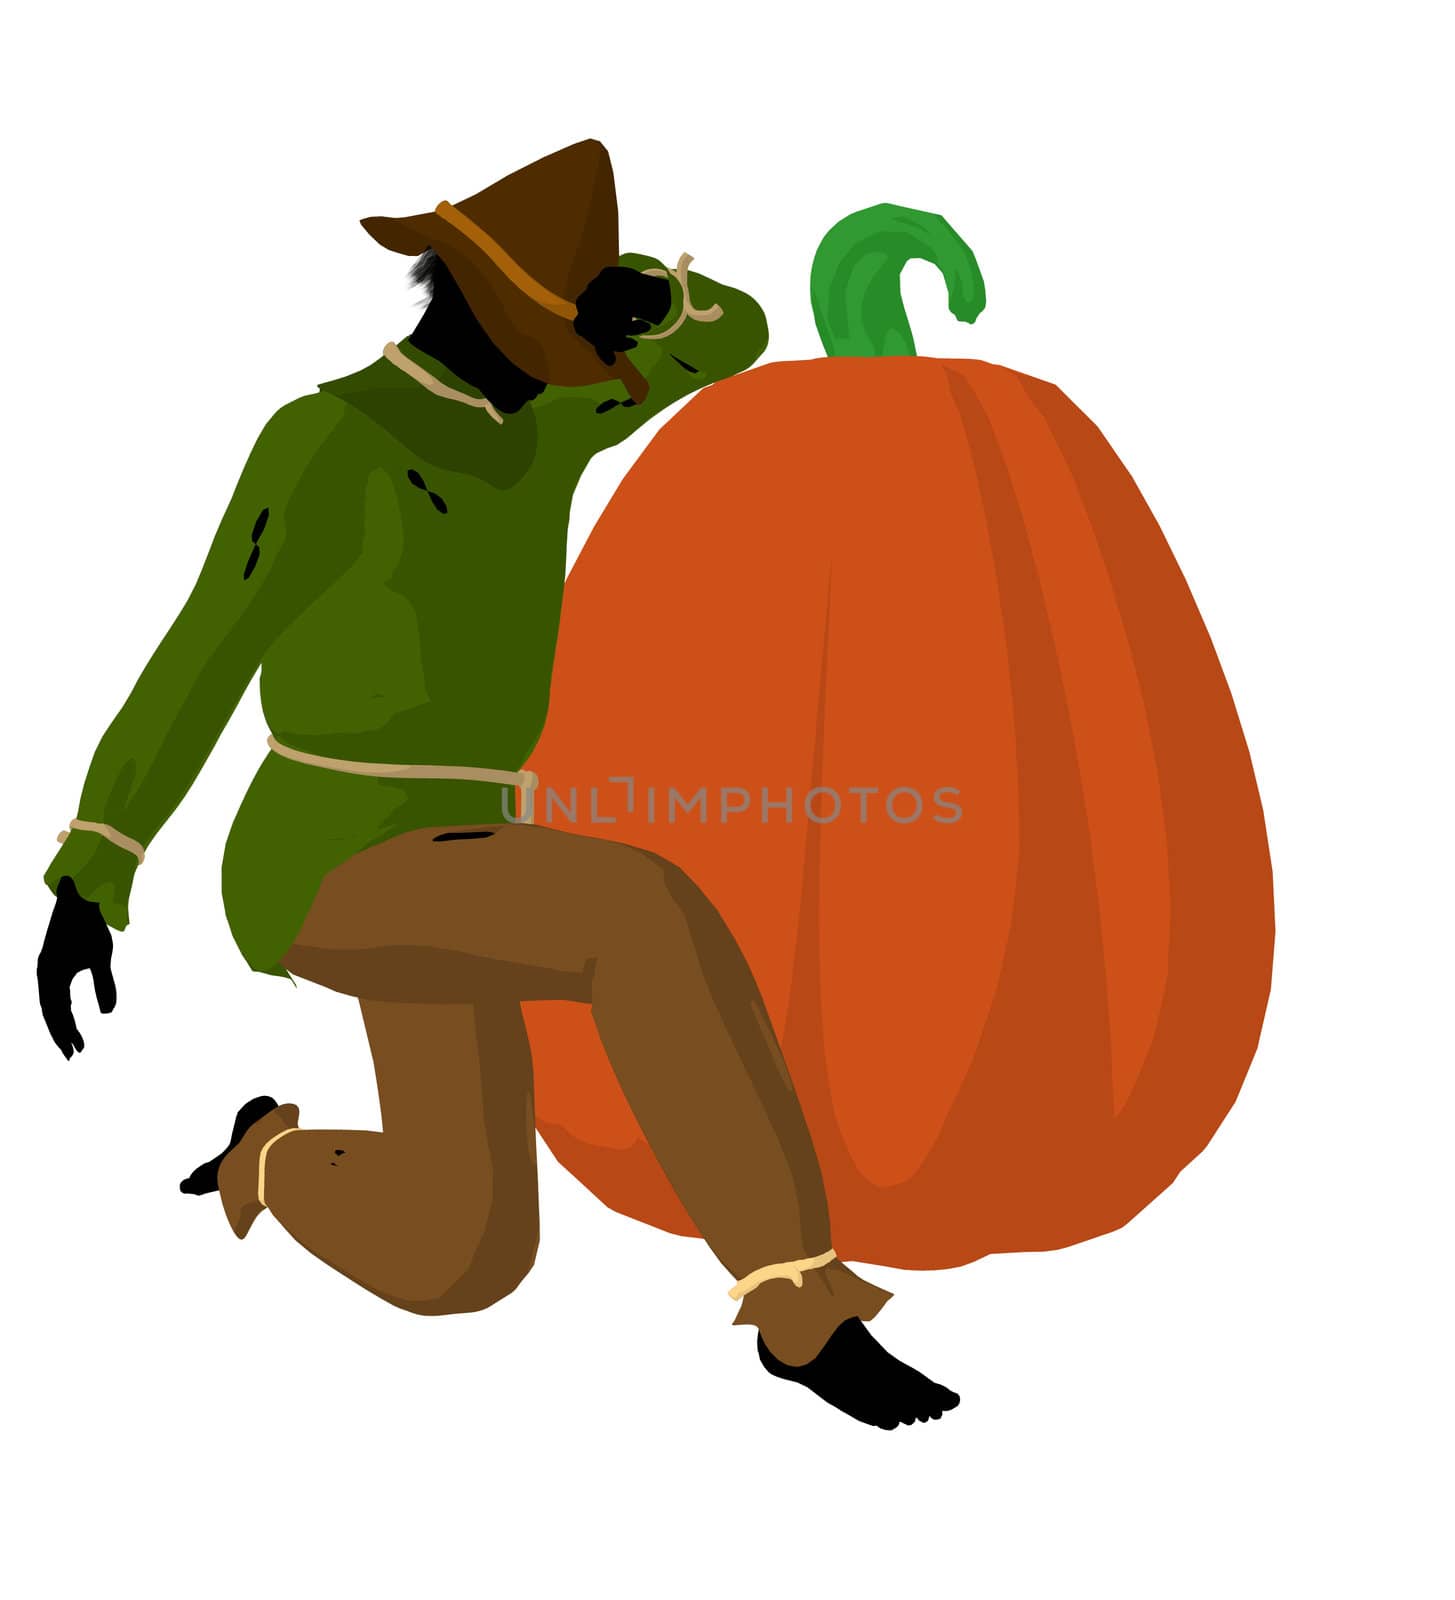 Halloween scarecrow next to a pumpkin silhouette illustration on a white background